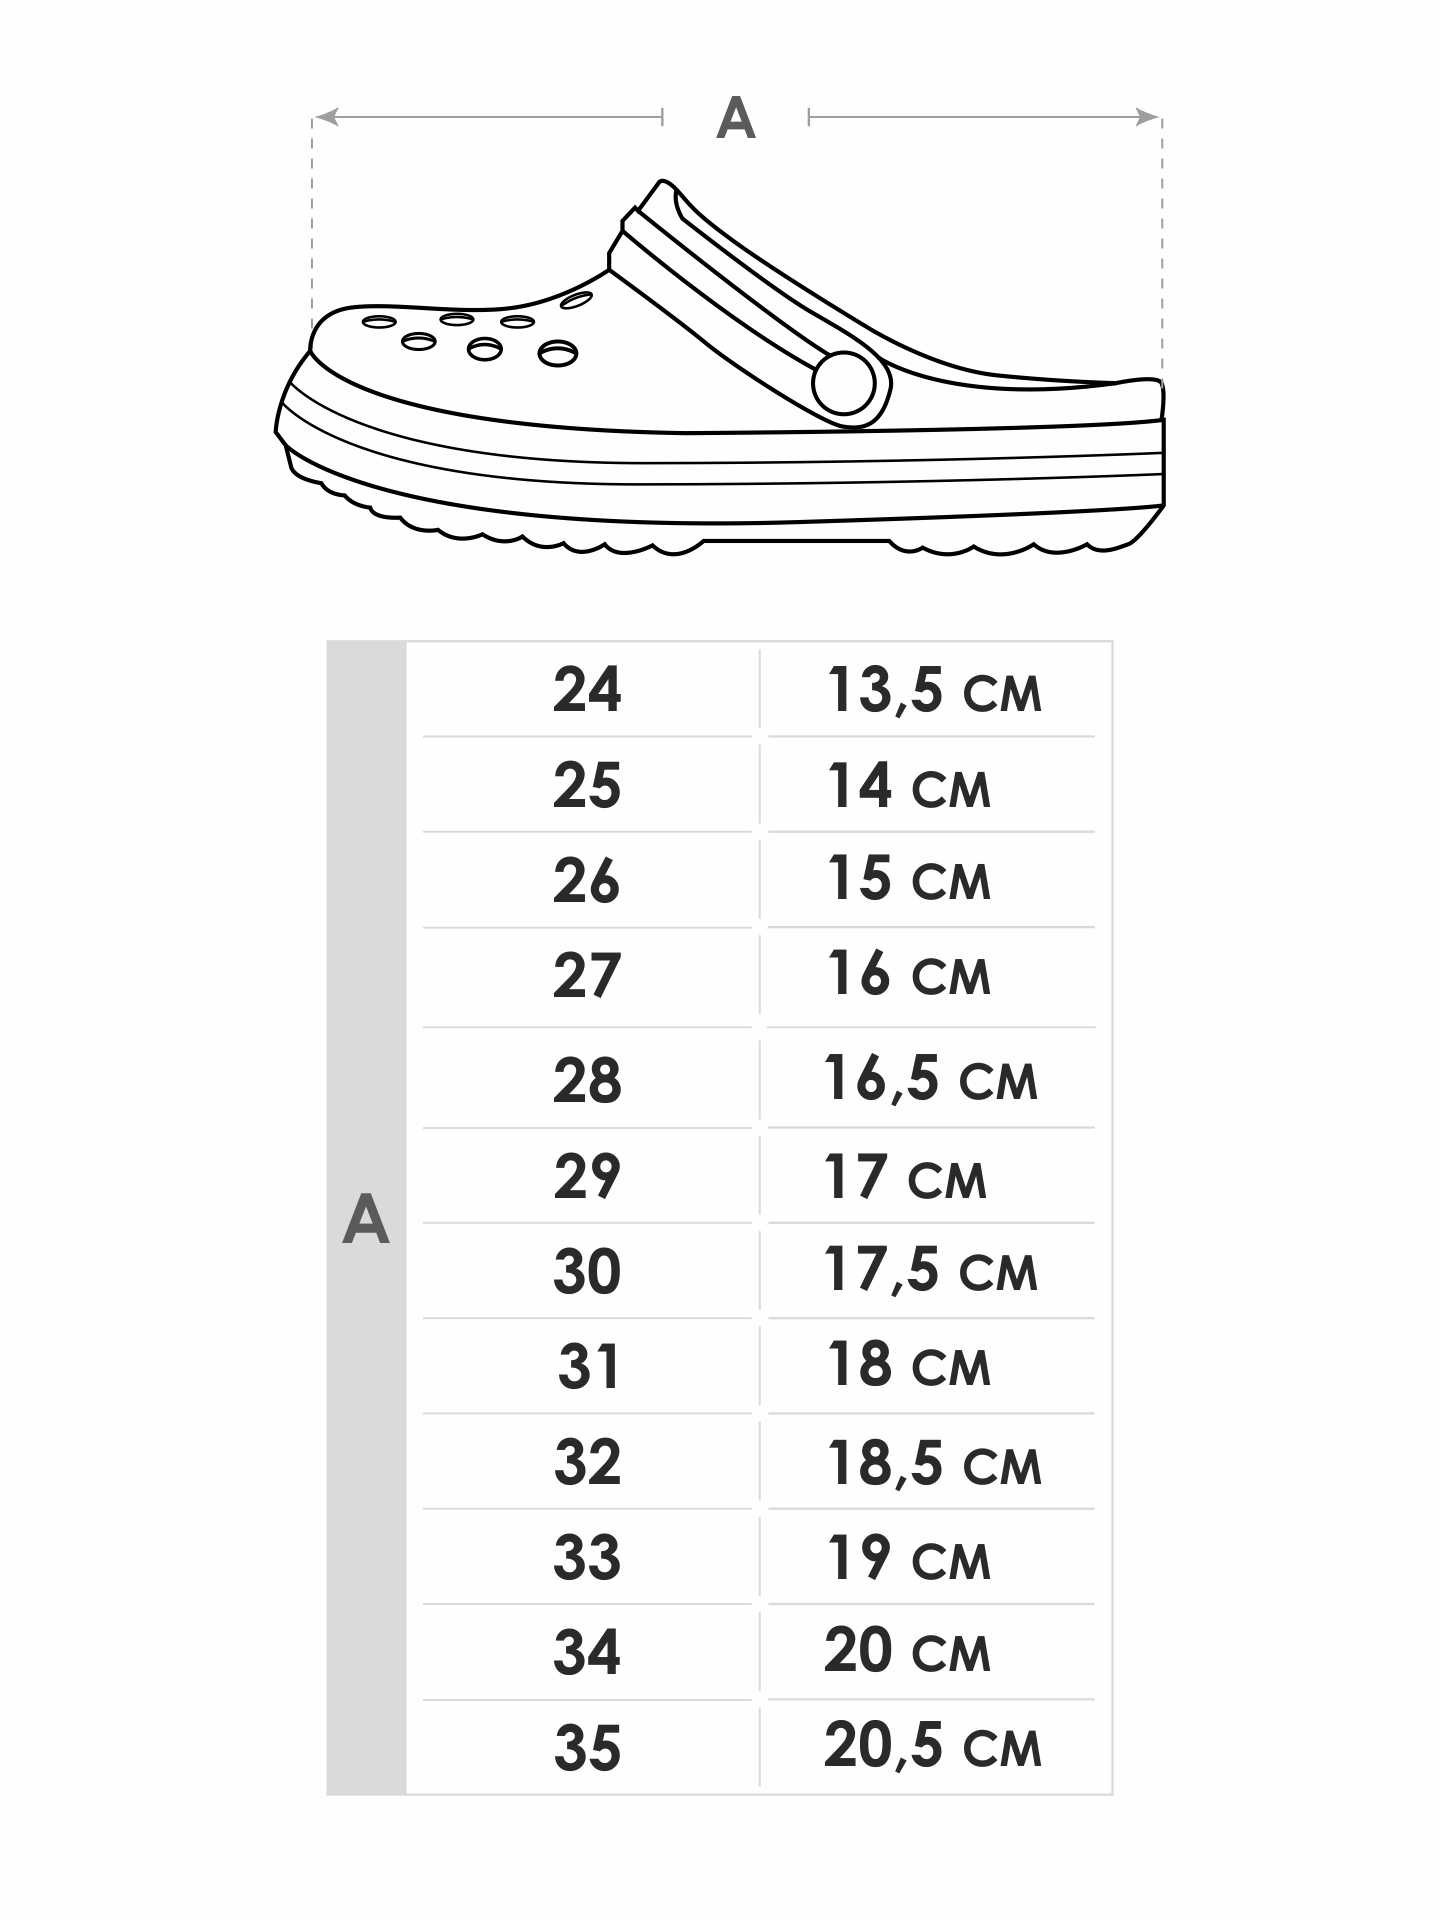 Yoclub Dívčí boty Crocs Slip-On Sandals OCR-0043G-1500 Multicolour 30